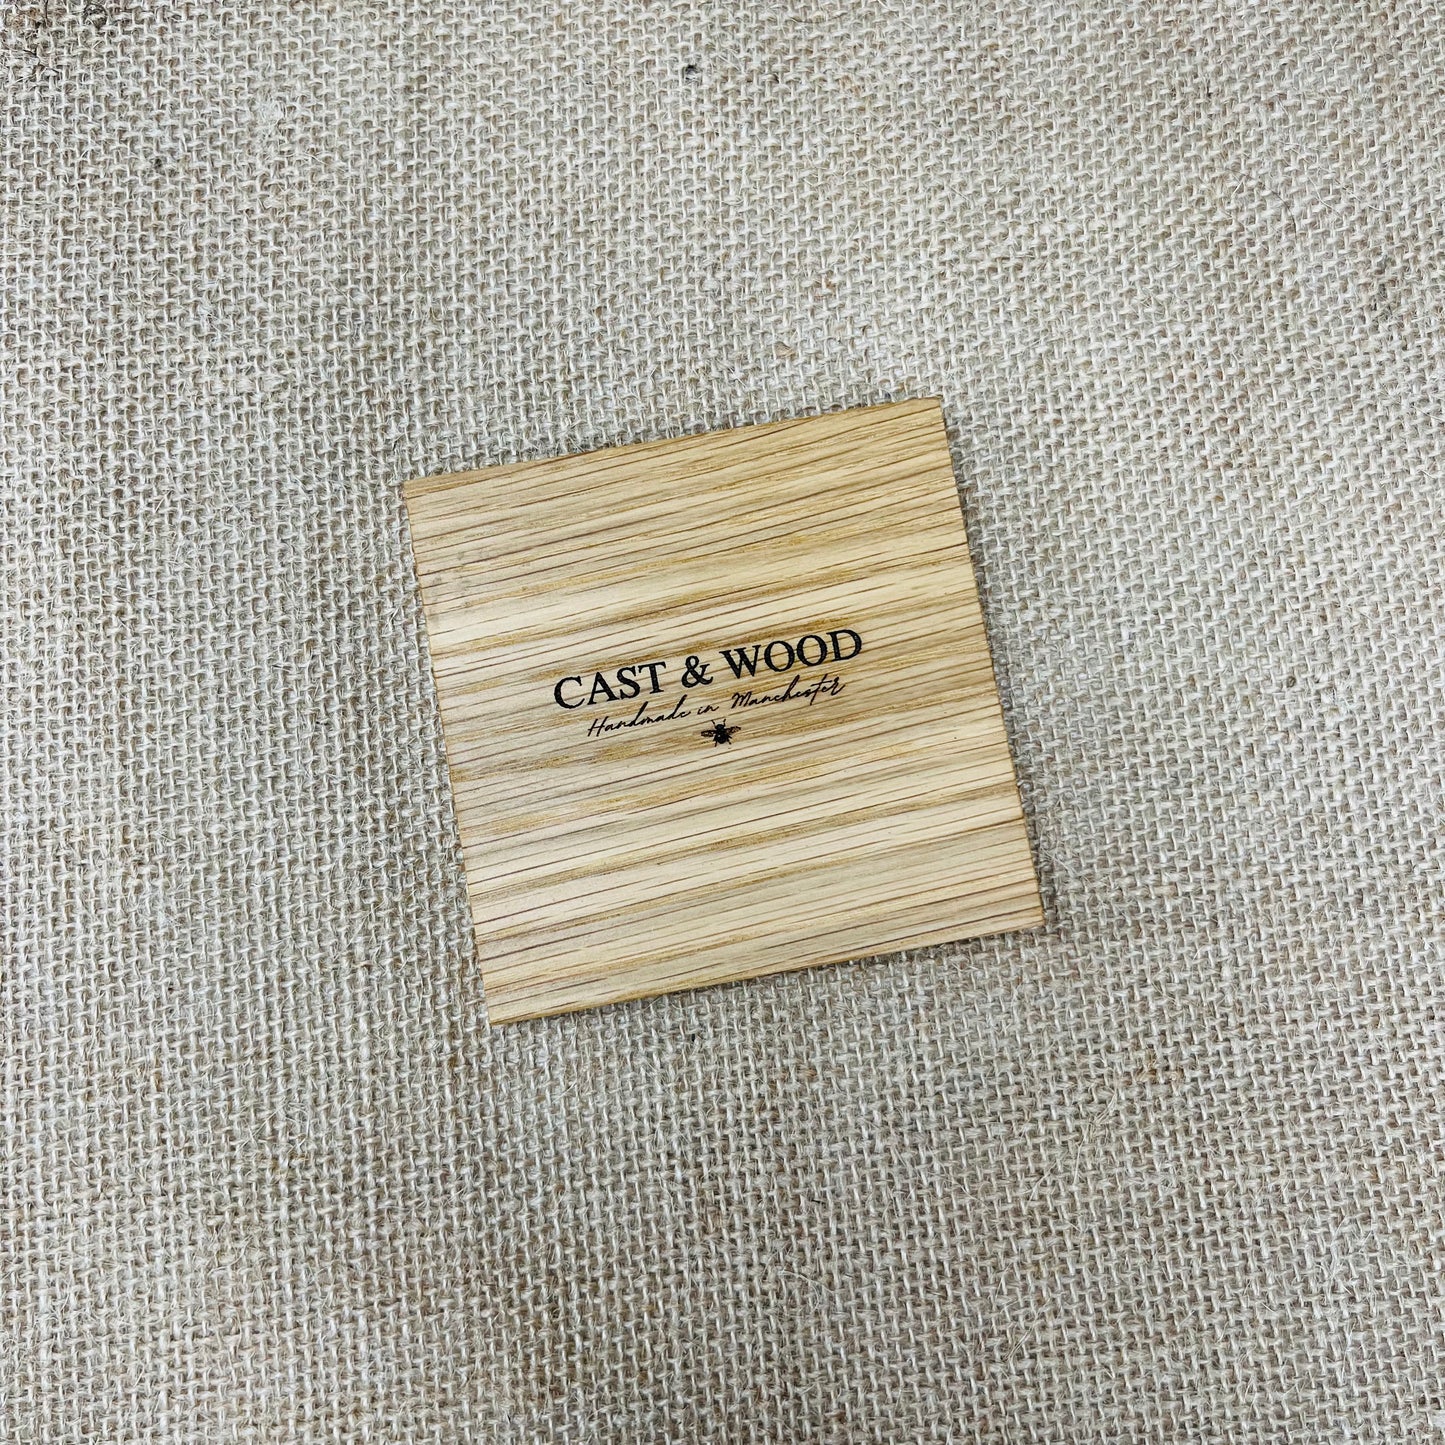 Personalised Letter Coaster - Engraved Solid Oak